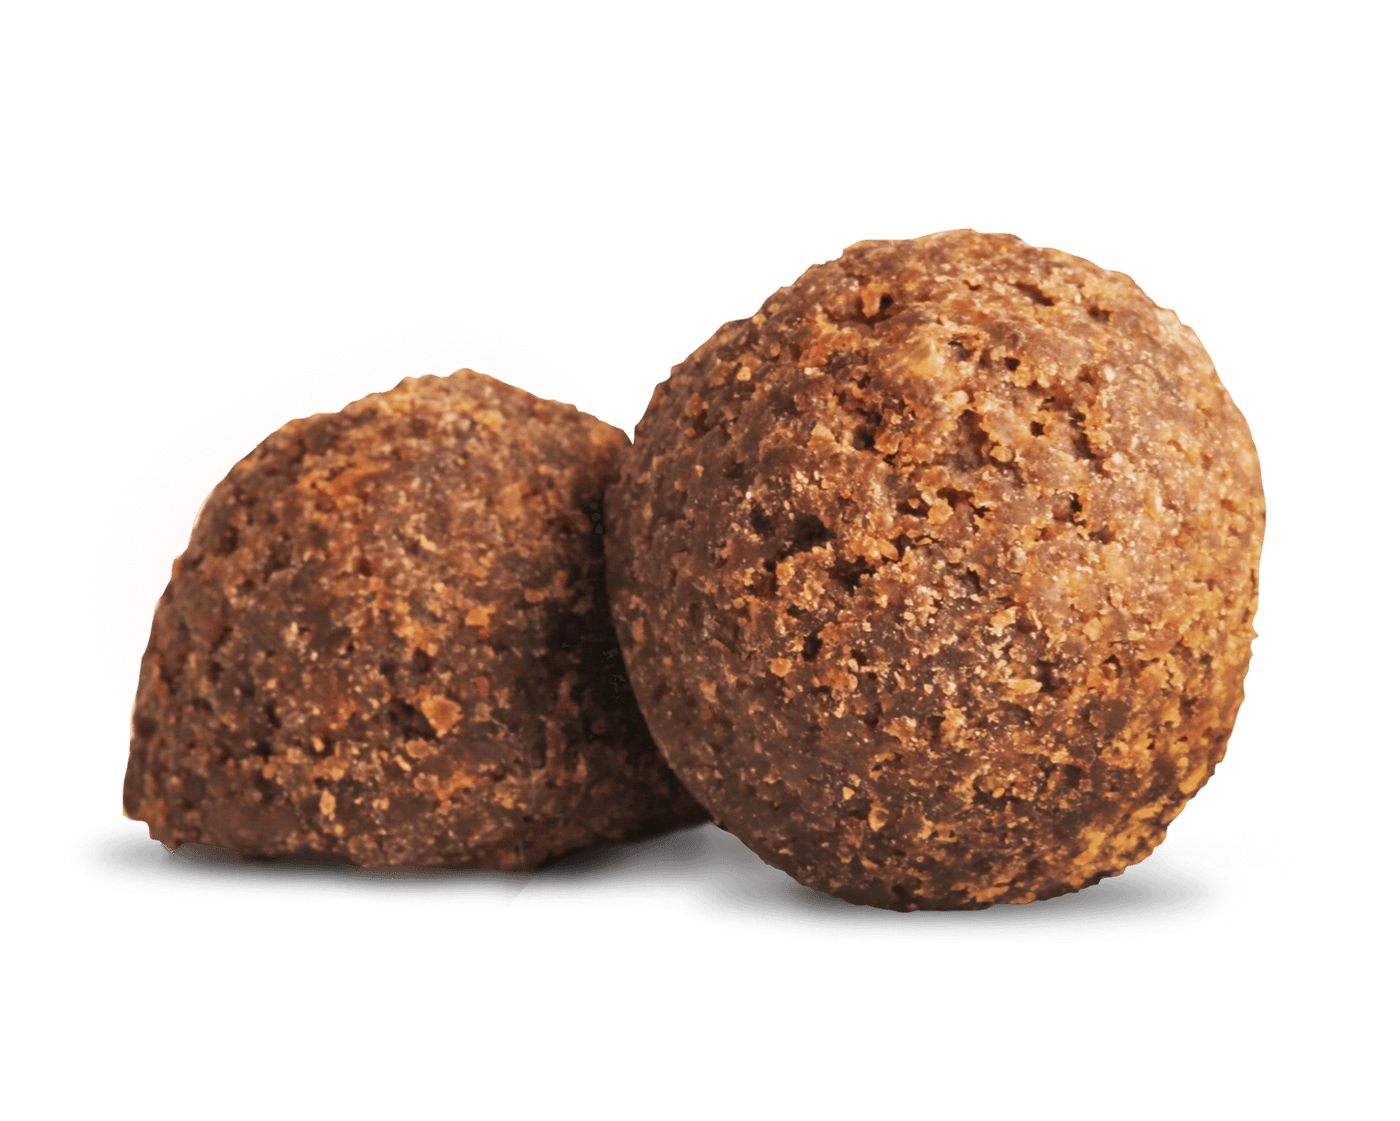 Wagmore Meatballs - Italian Beef